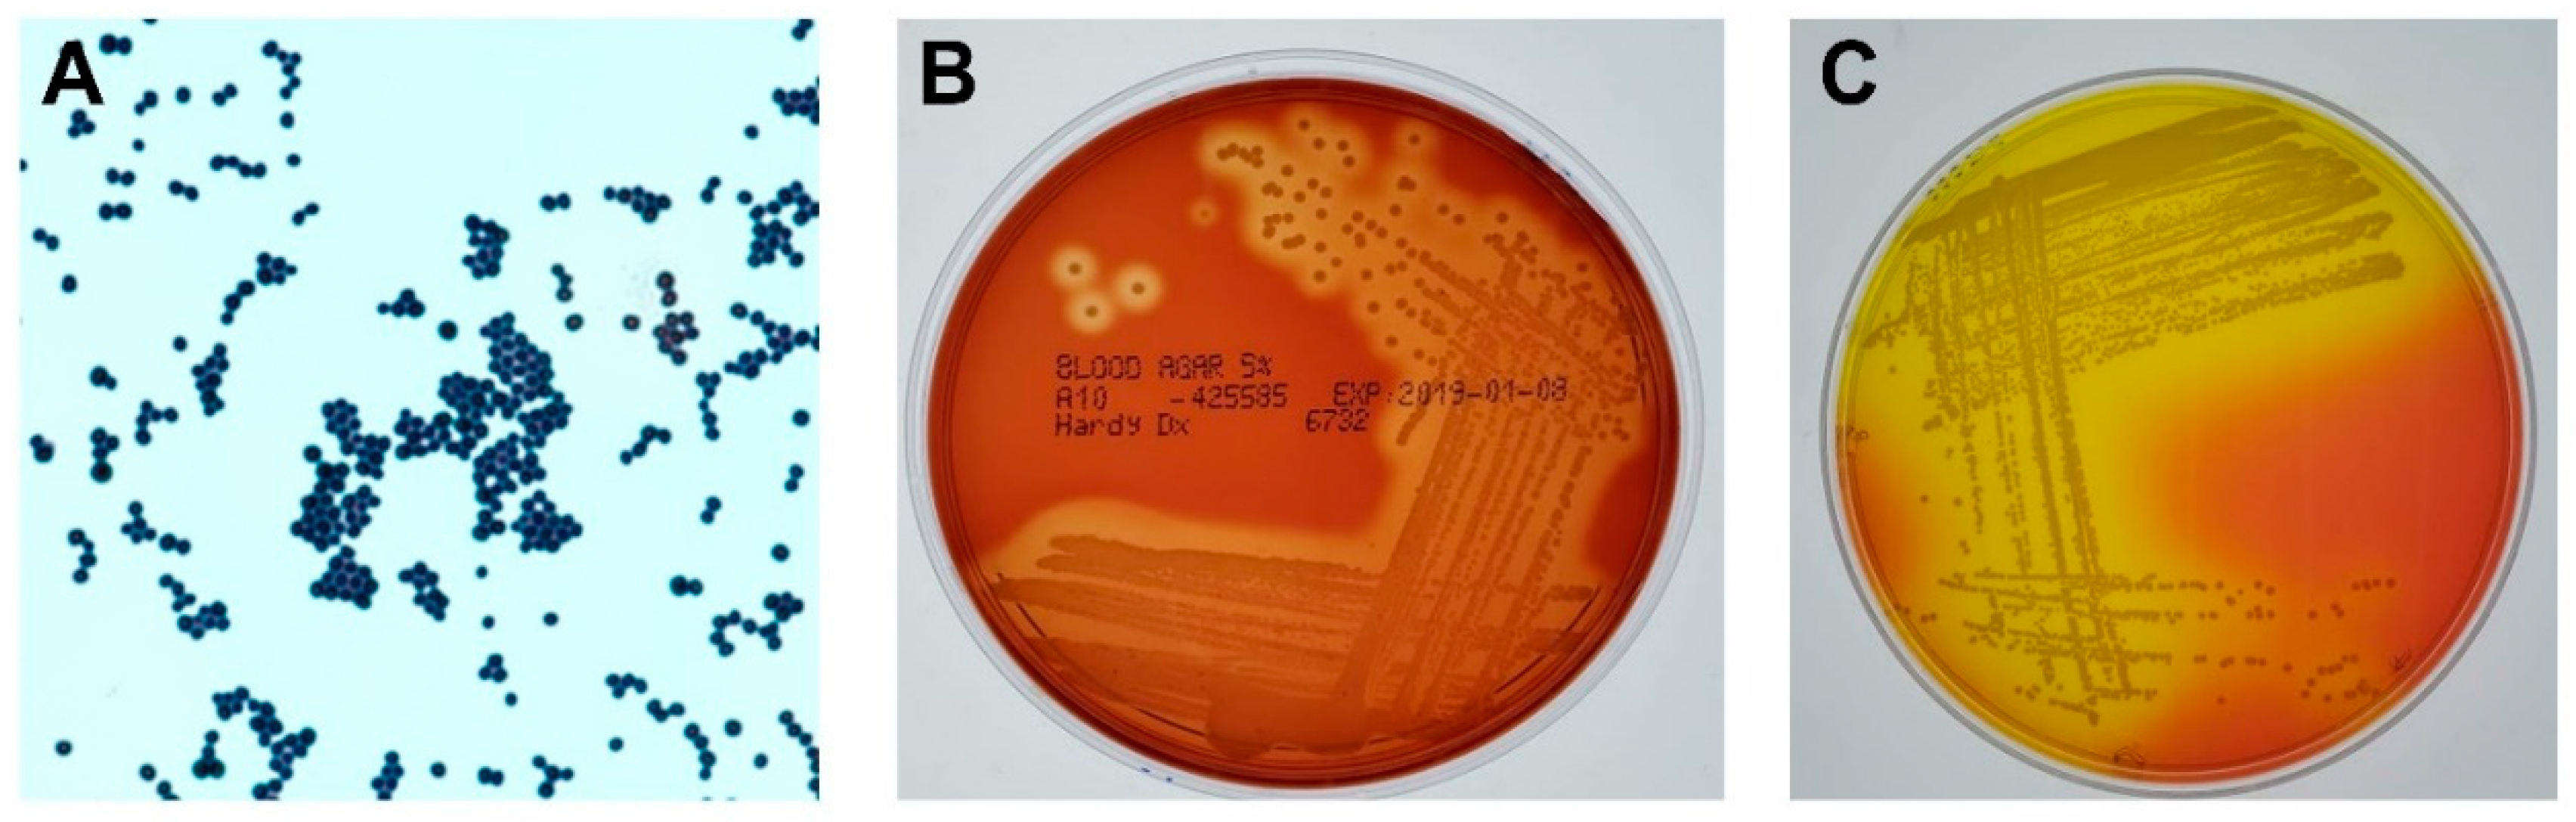 Staphylococcus Aureus, Pathology, Microbiology